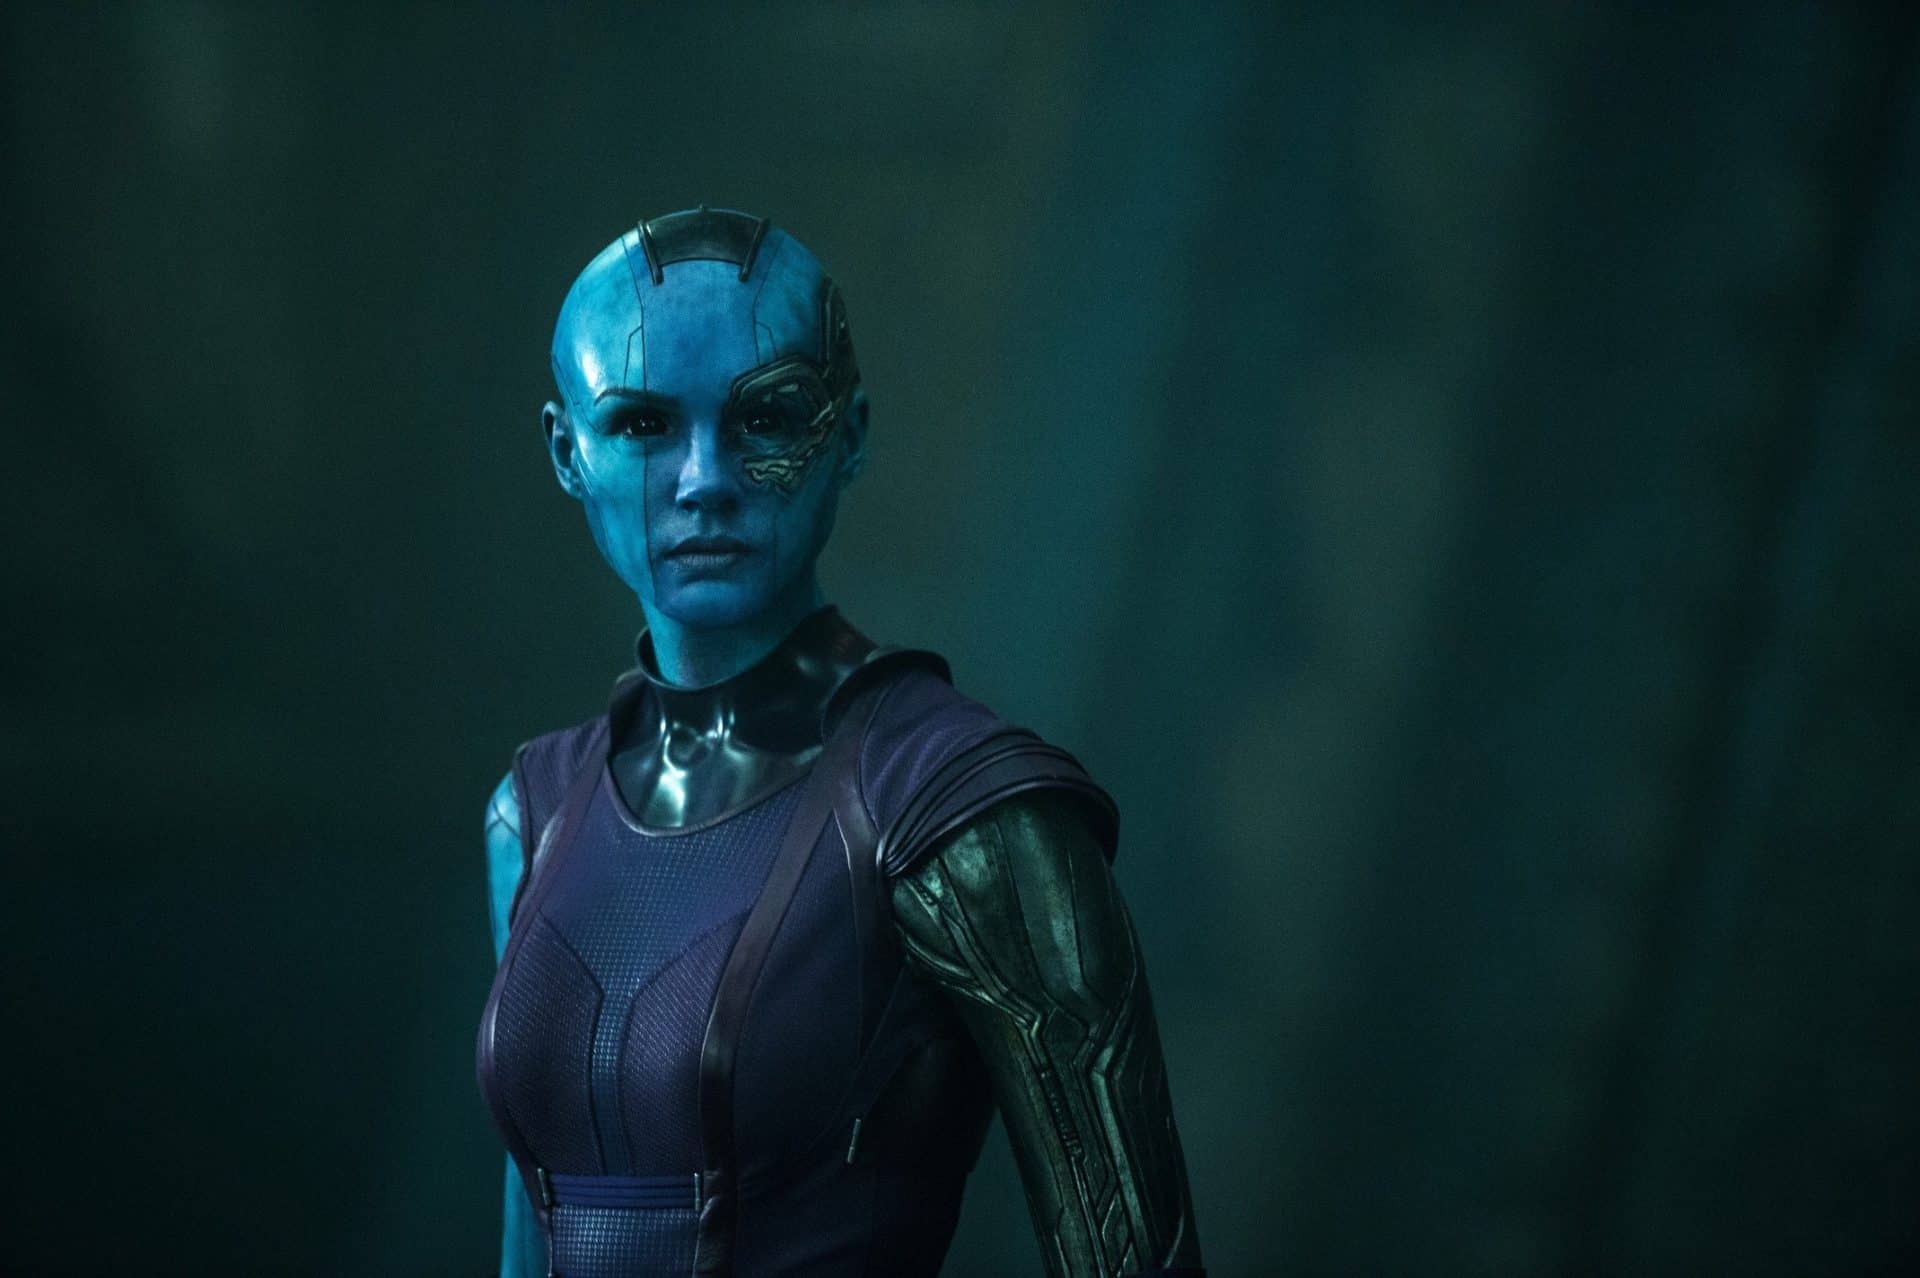 Karen Gillan spera che Nebula risolva i problemi col padre in Avengers 4